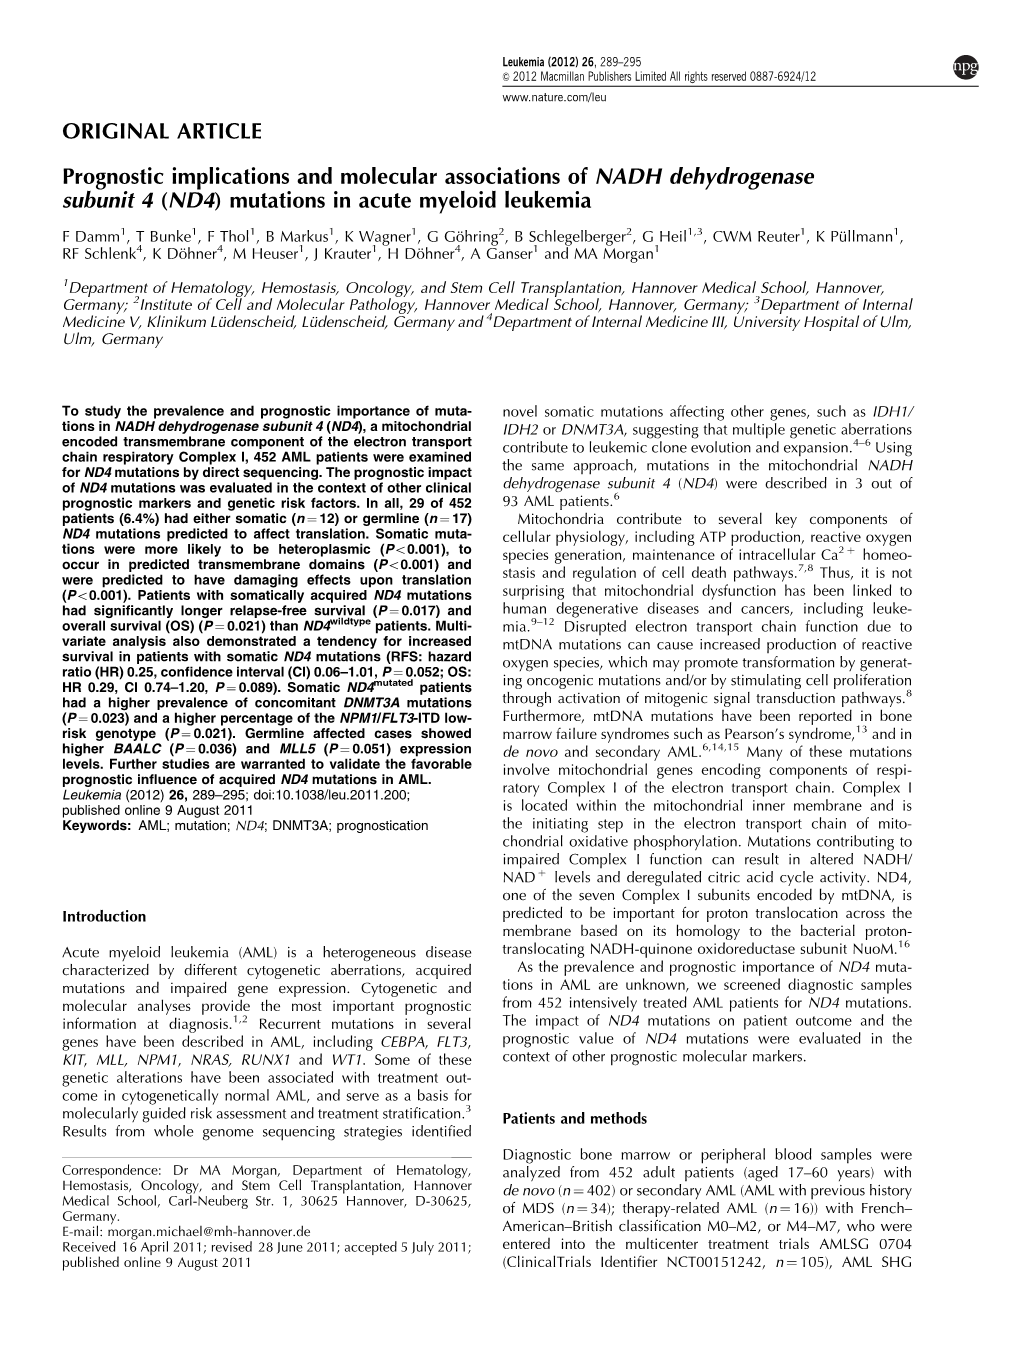 Prognostic Implications and Molecular Associations of NADH Dehydrogenase Subunit 4 (ND4) Mutations in Acute Myeloid Leukemia